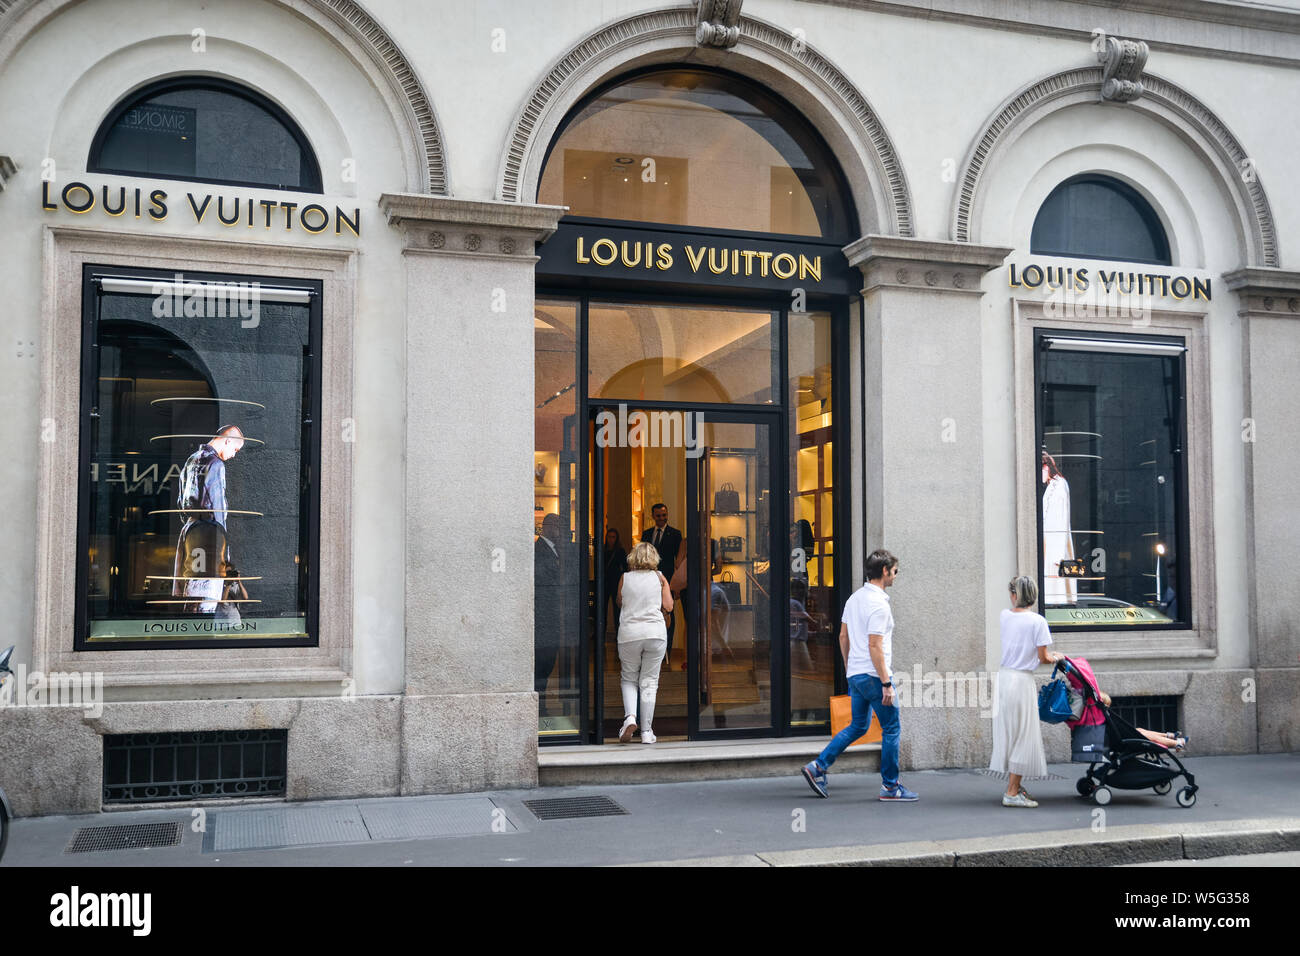 Milan Italy September 2018 Louis Vuitton Store Milan Montenapoleone Area –  Stock Editorial Photo © Casimiro_PT #217544872